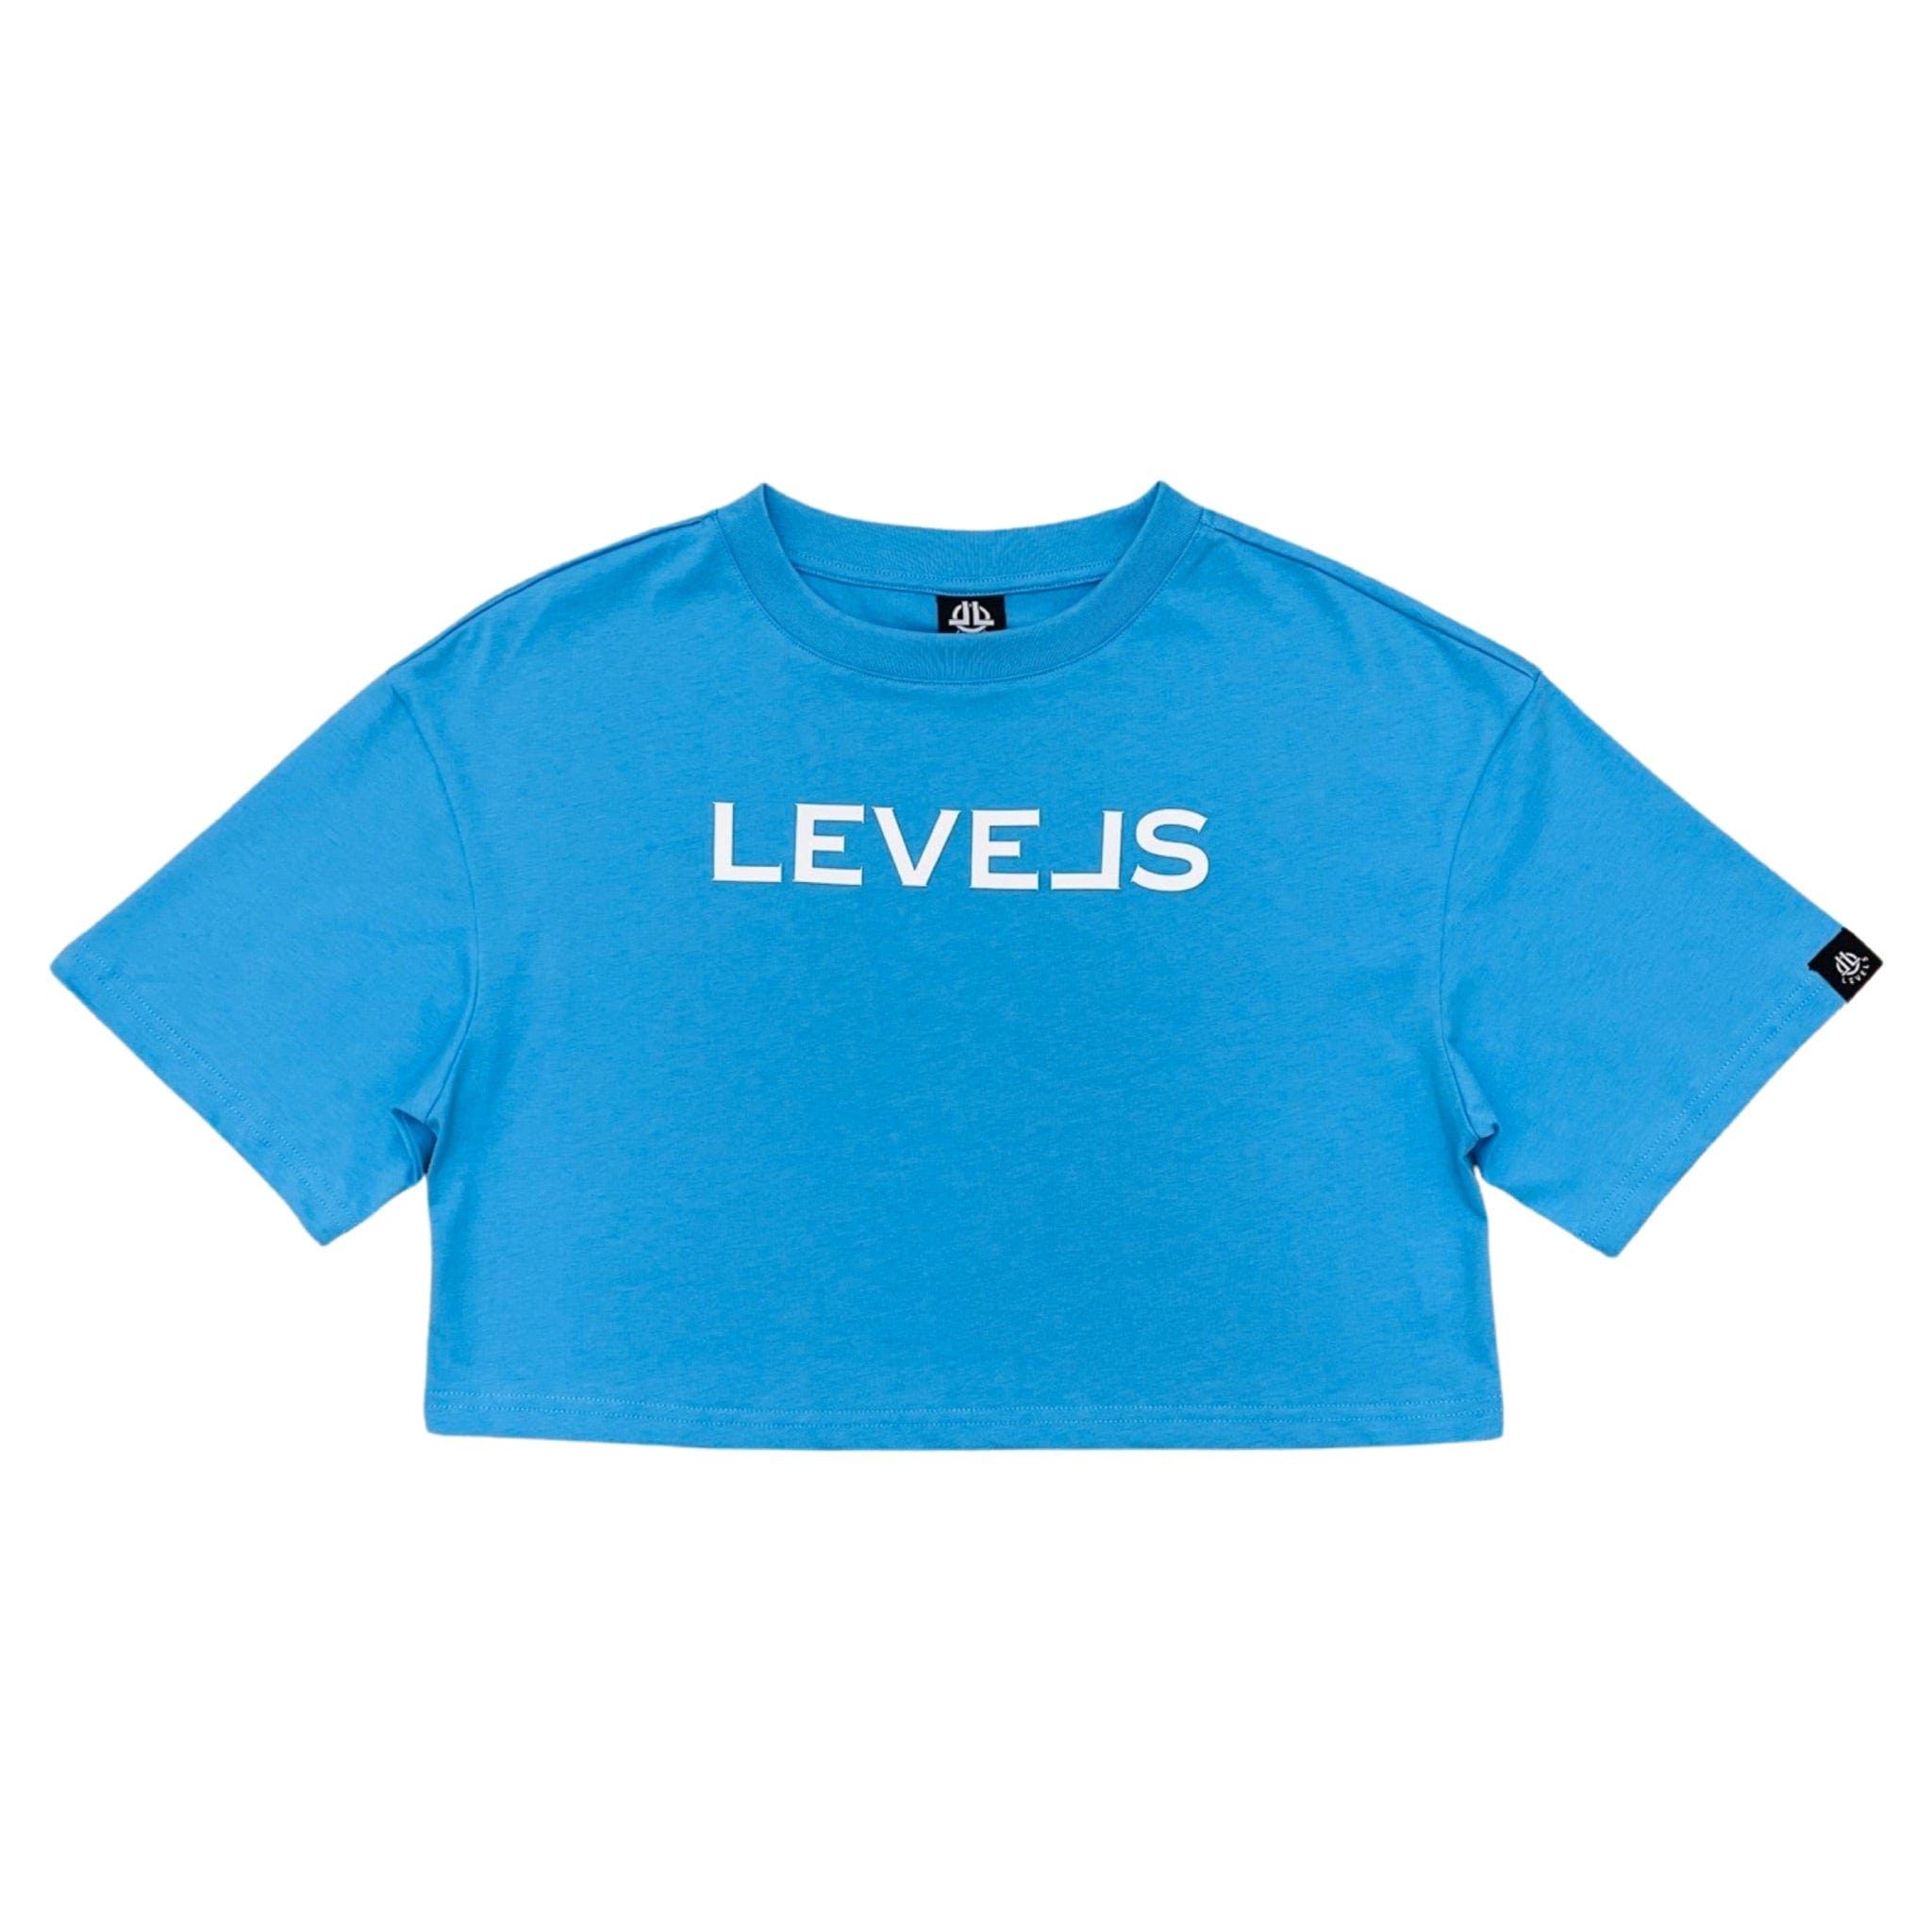 LEVELS, LLC Apparel & Accessories LEVELS OVERSIZED CROP TEE (SUMMER BLUE)